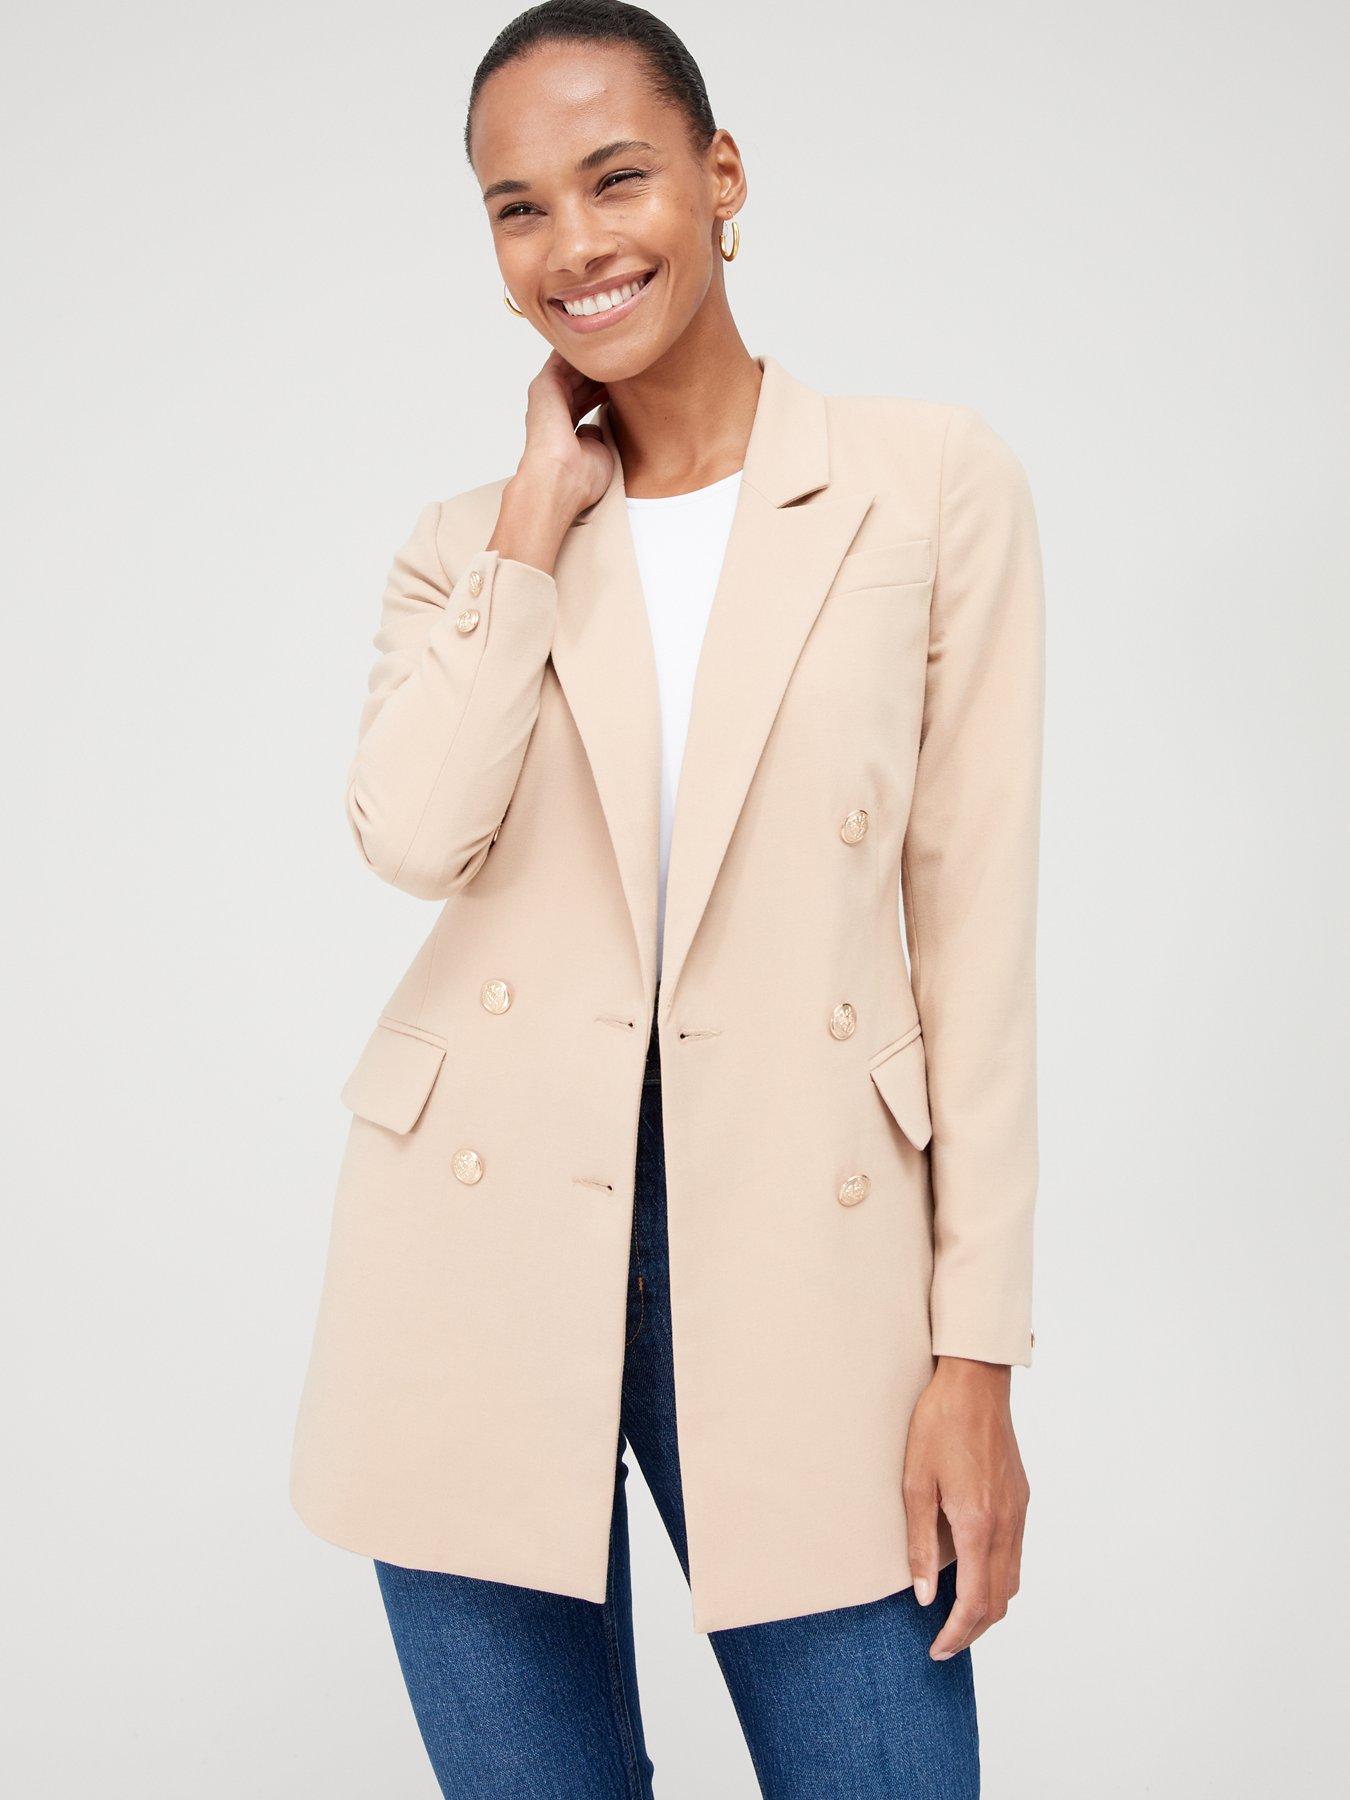 VERYCO Women Suit Jackets Ladies Plain Long Sleeve Lapel Office Casual Blazer Tops 